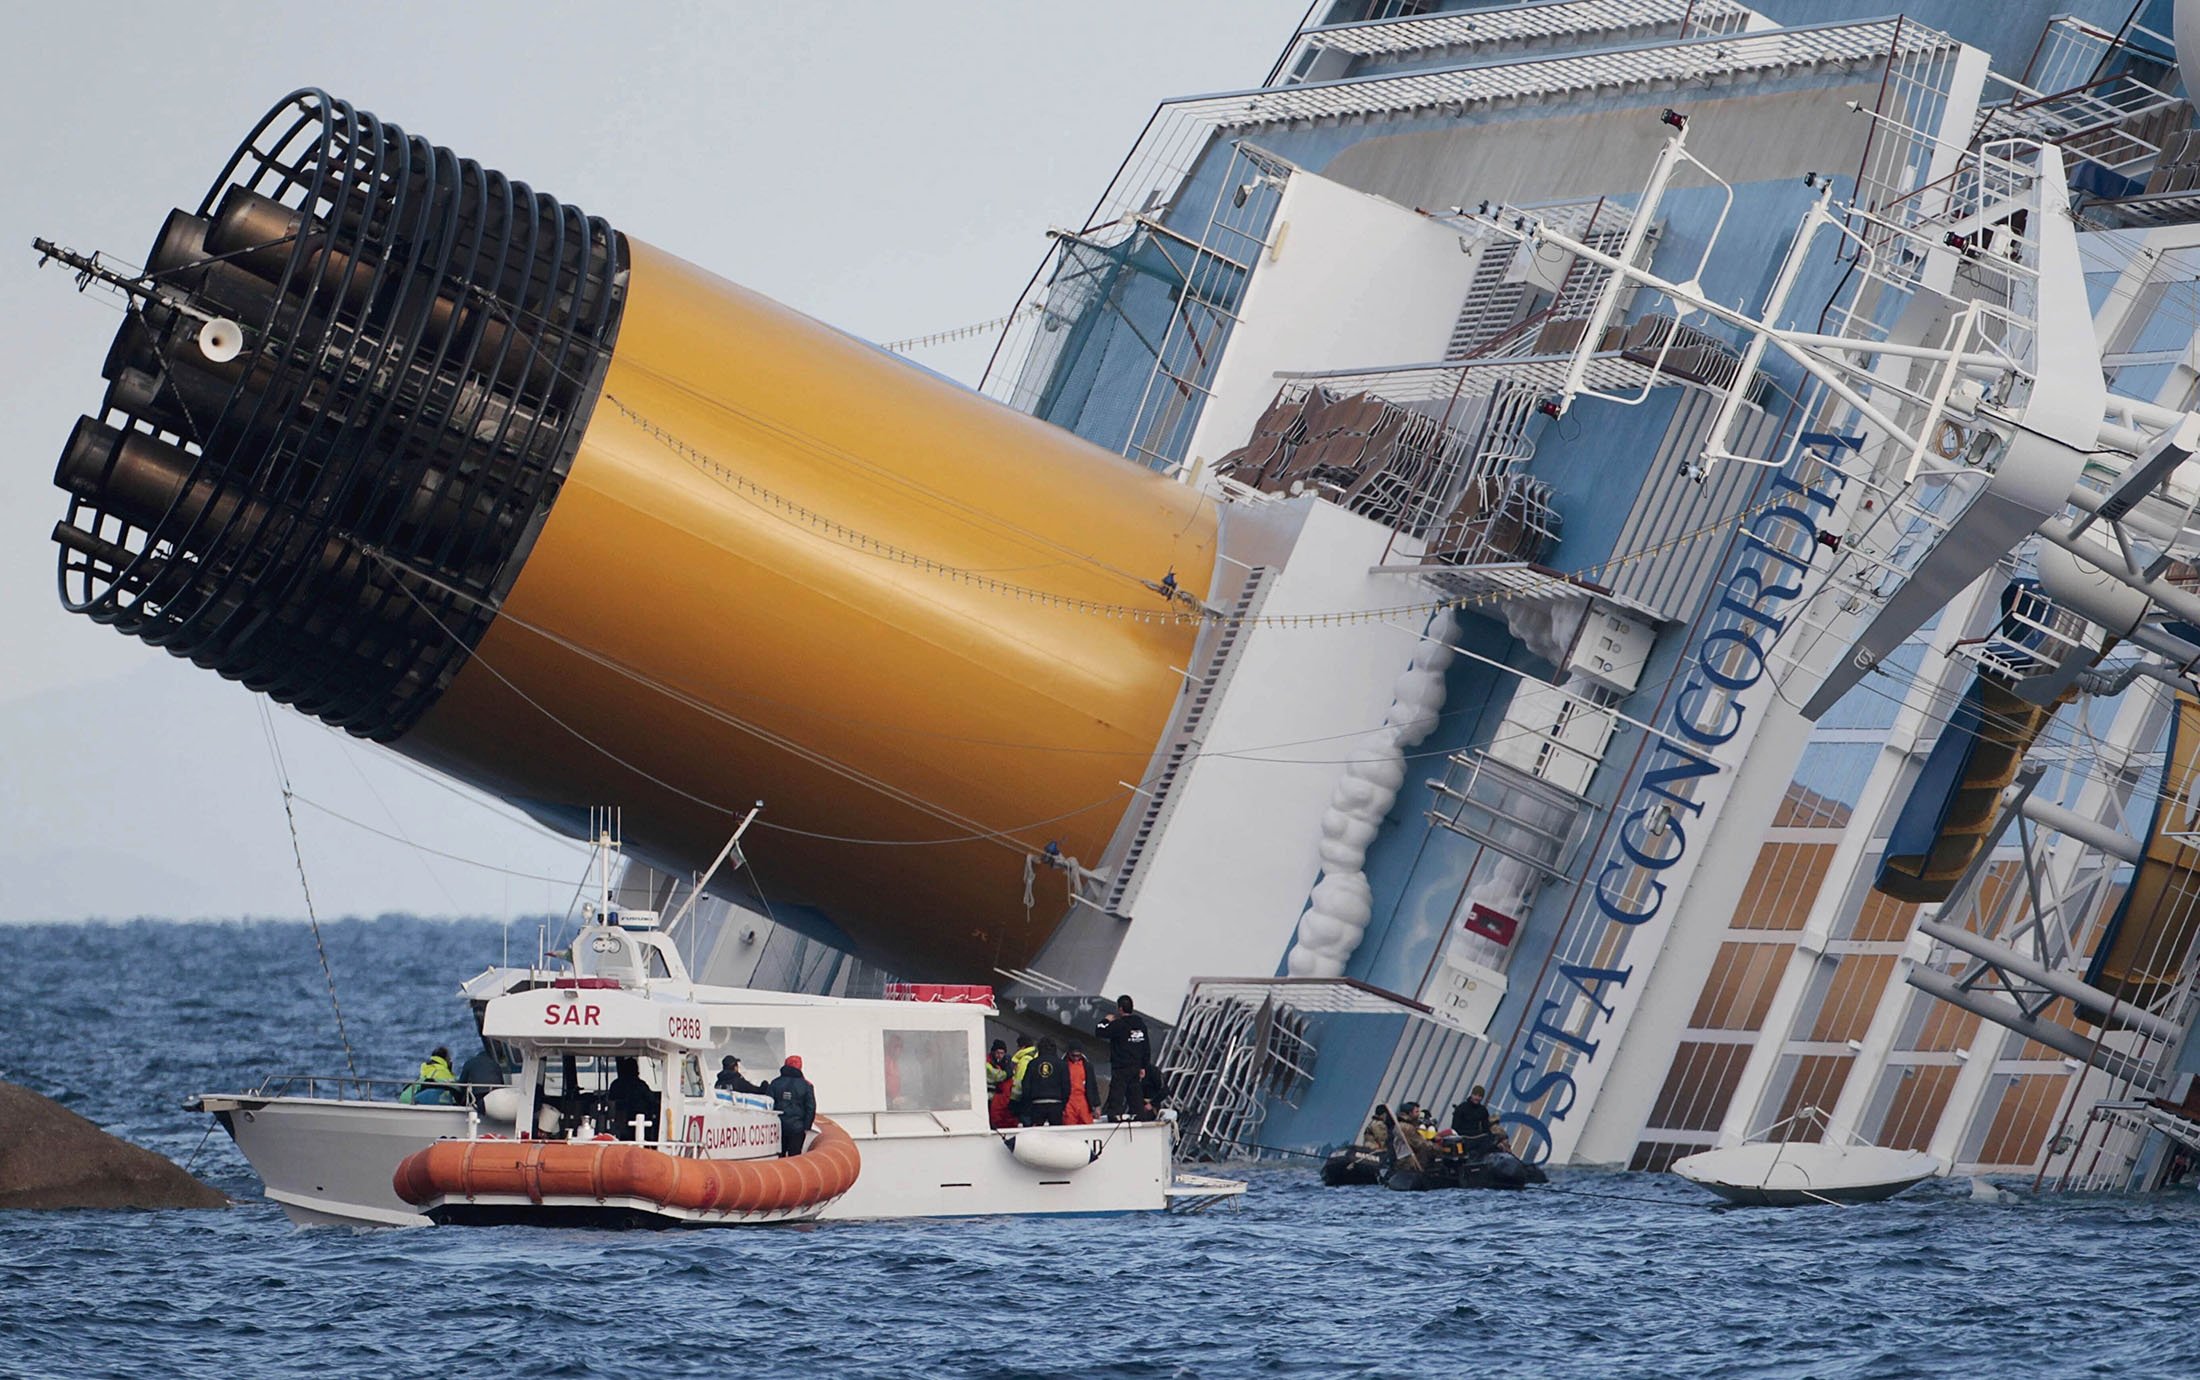 sinking of cruise ship costa concordia